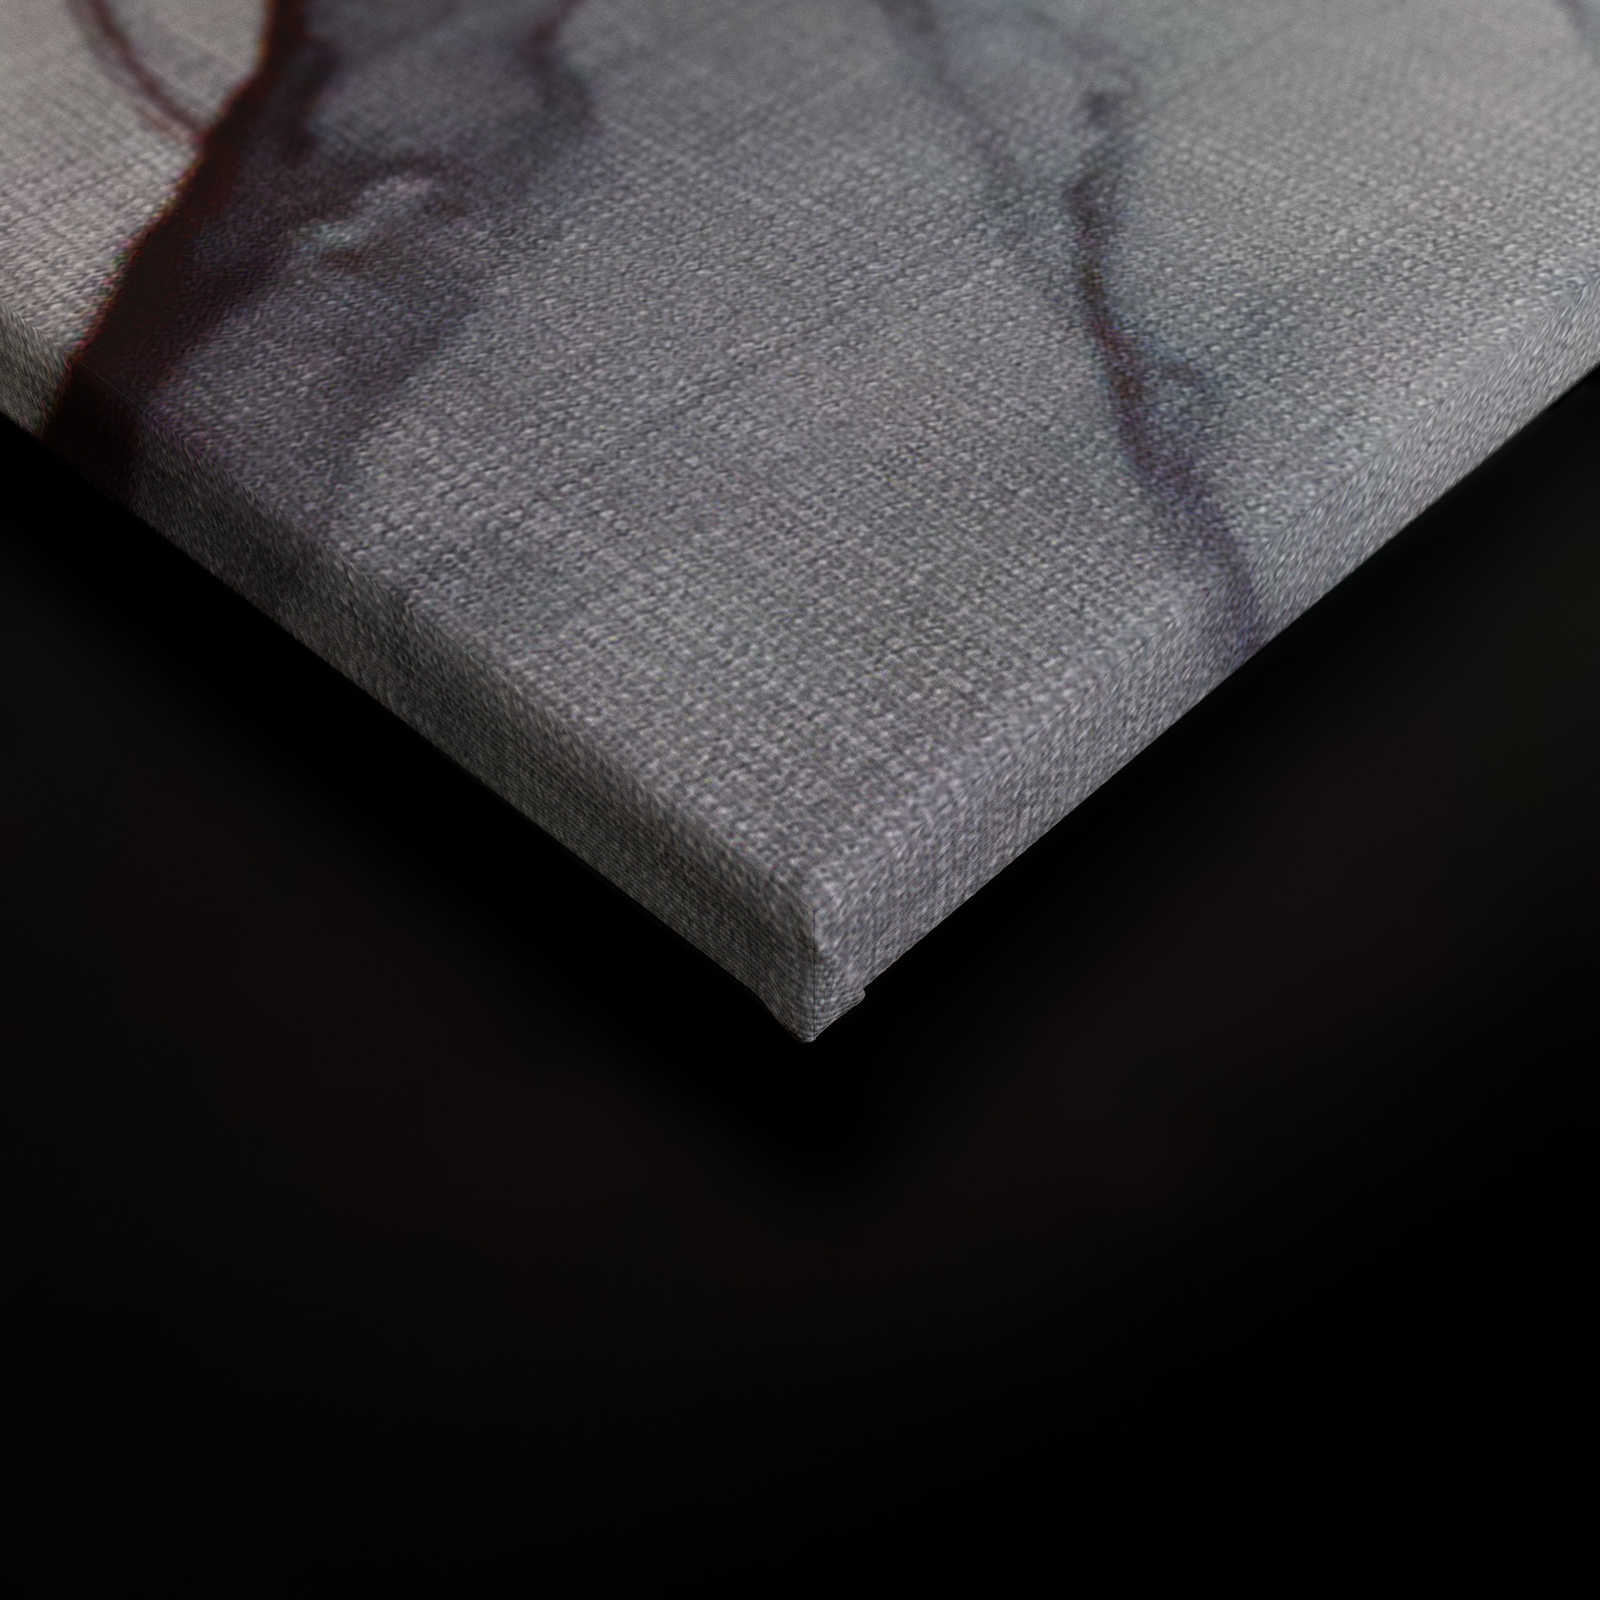             Leinwandbild mit Marmor-Muster aus Leinenoptik – 0,90 m x 0,60 m
        